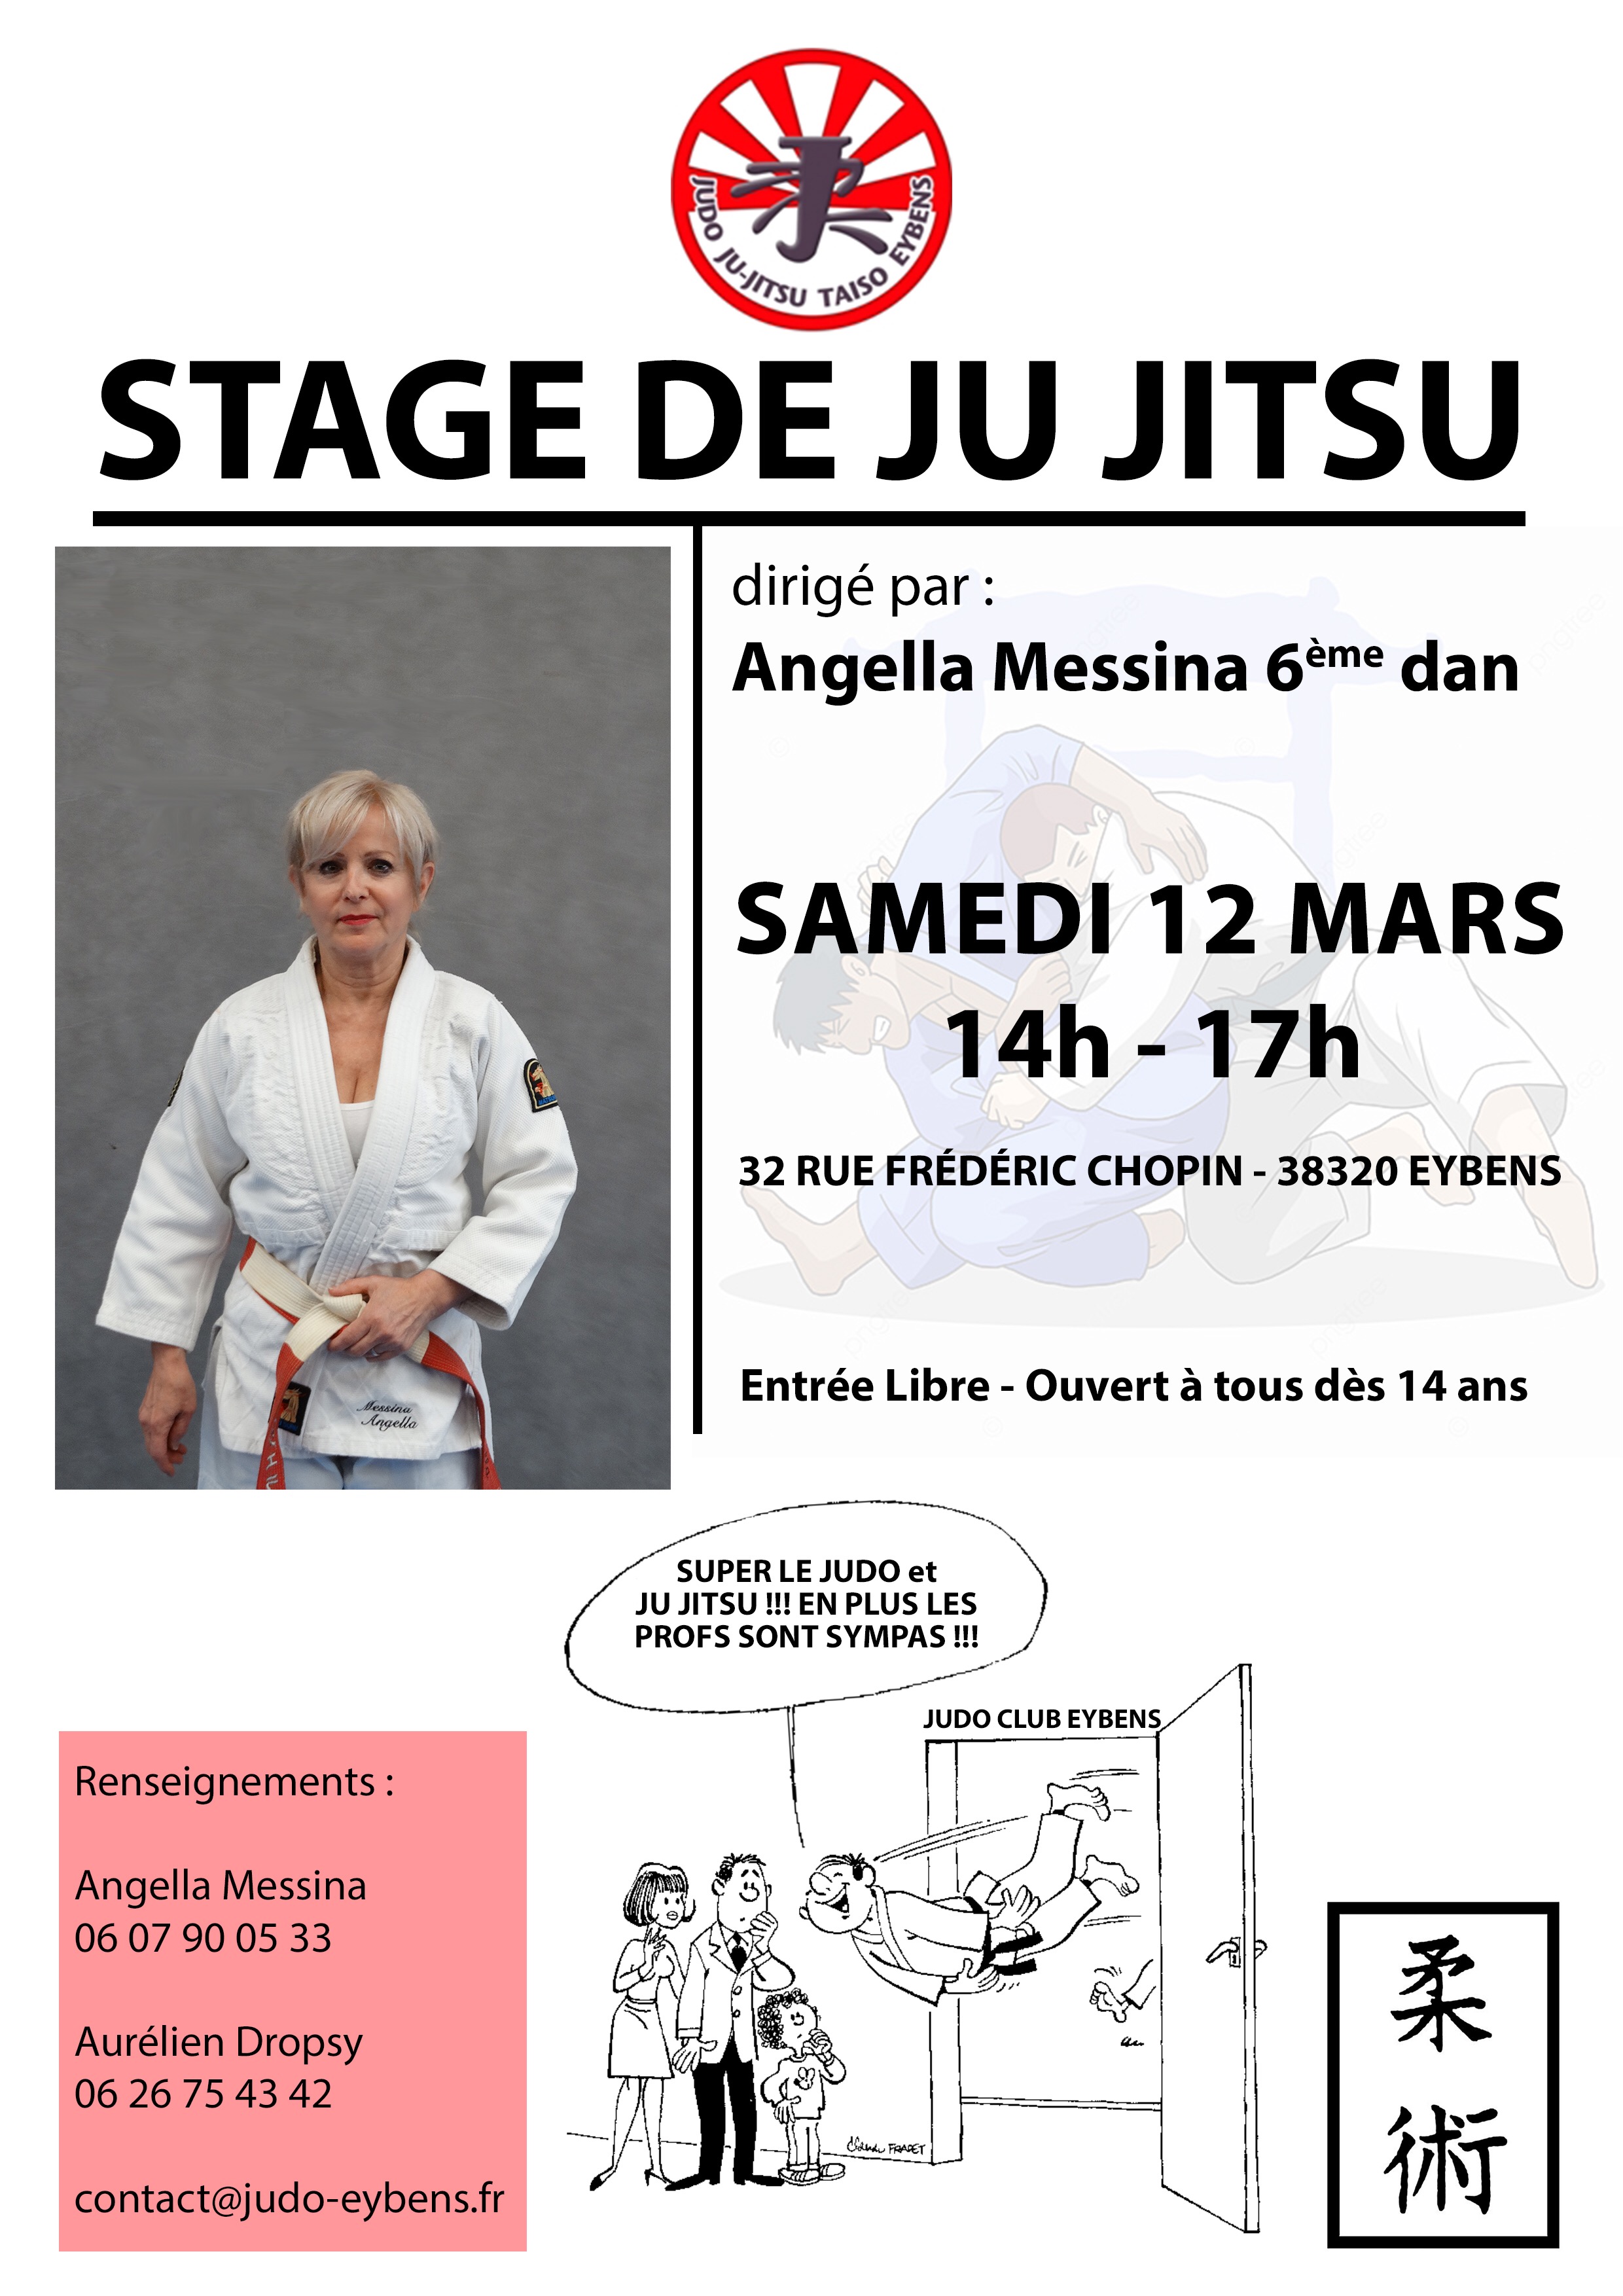 Stage de Ju jitsu avec Angella Messina